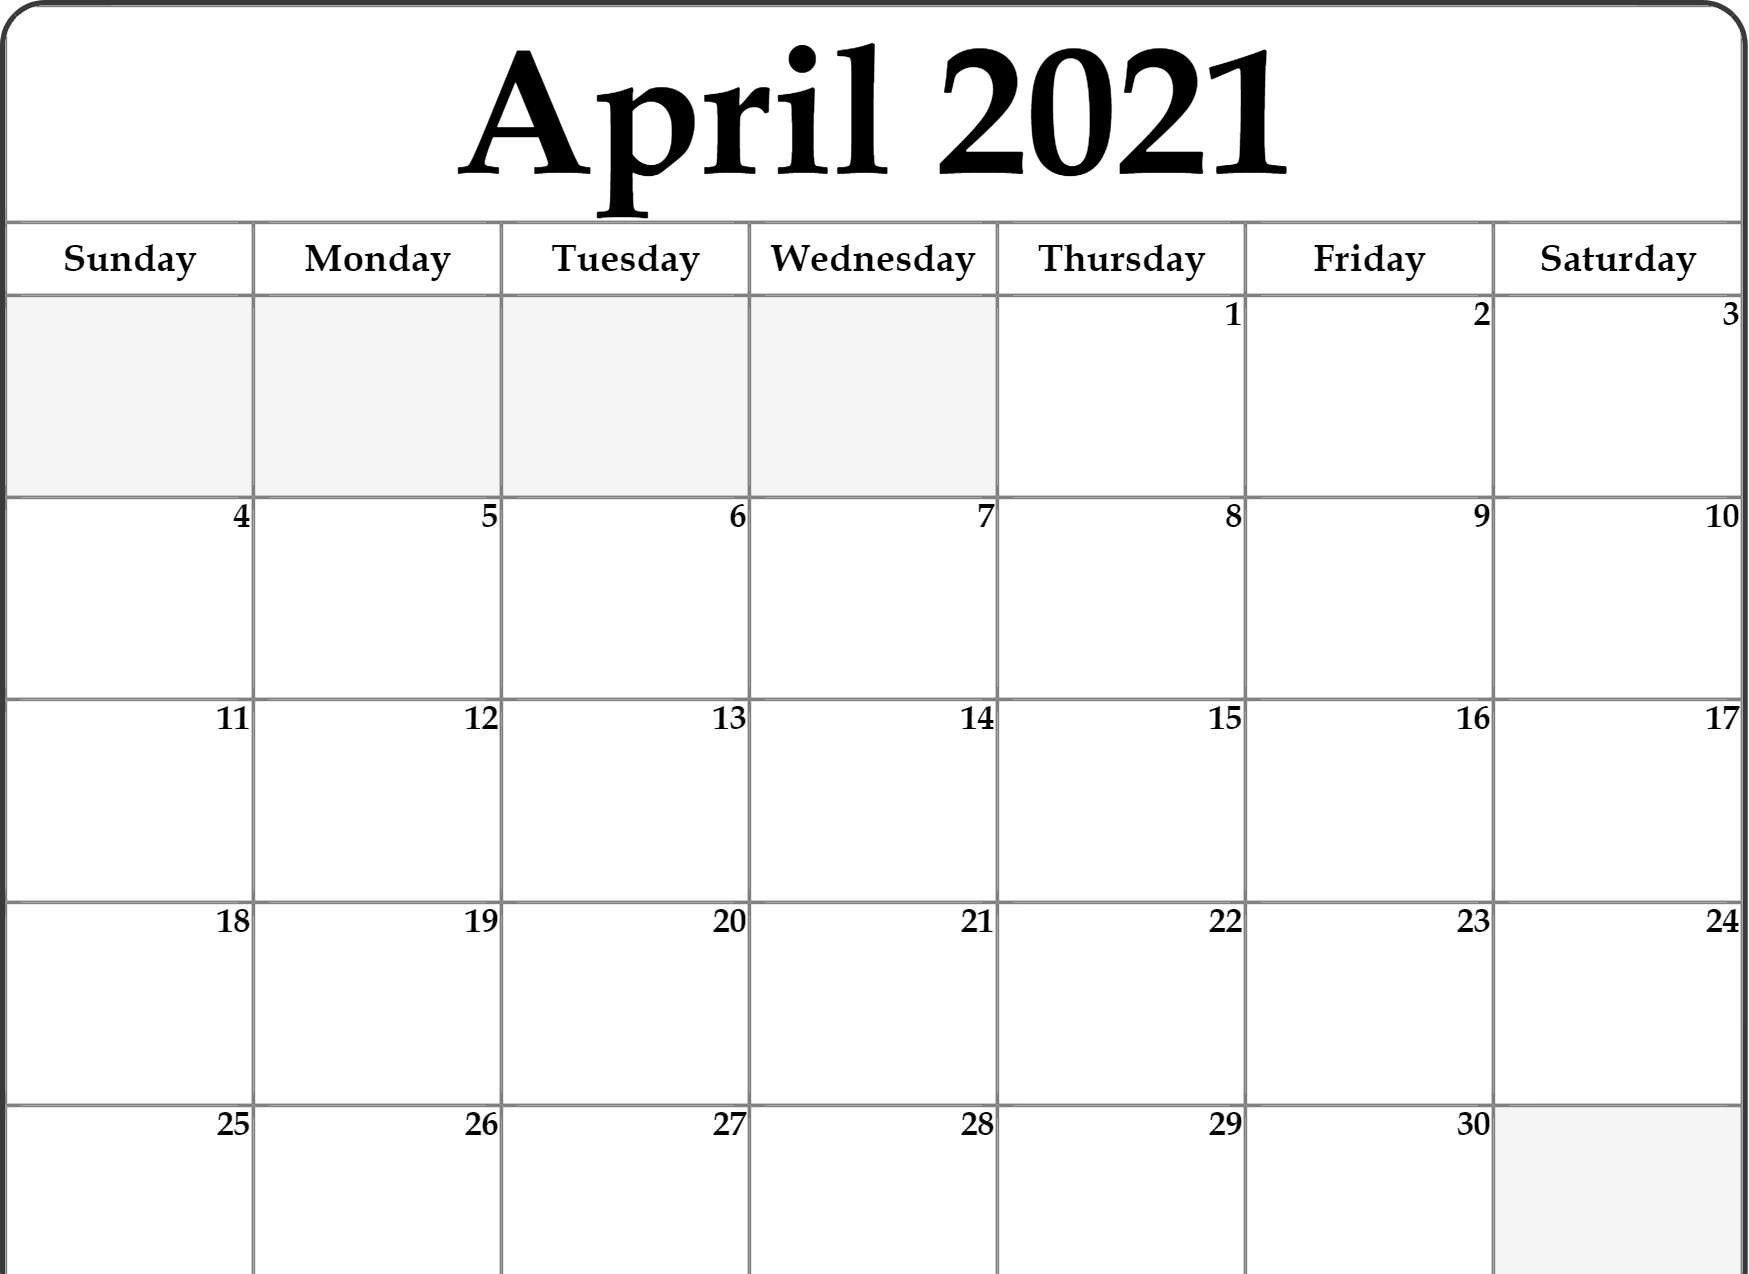 April 2021 Calendar Template With Holidays - Thecalendarpedia April - June 2021 Calendar